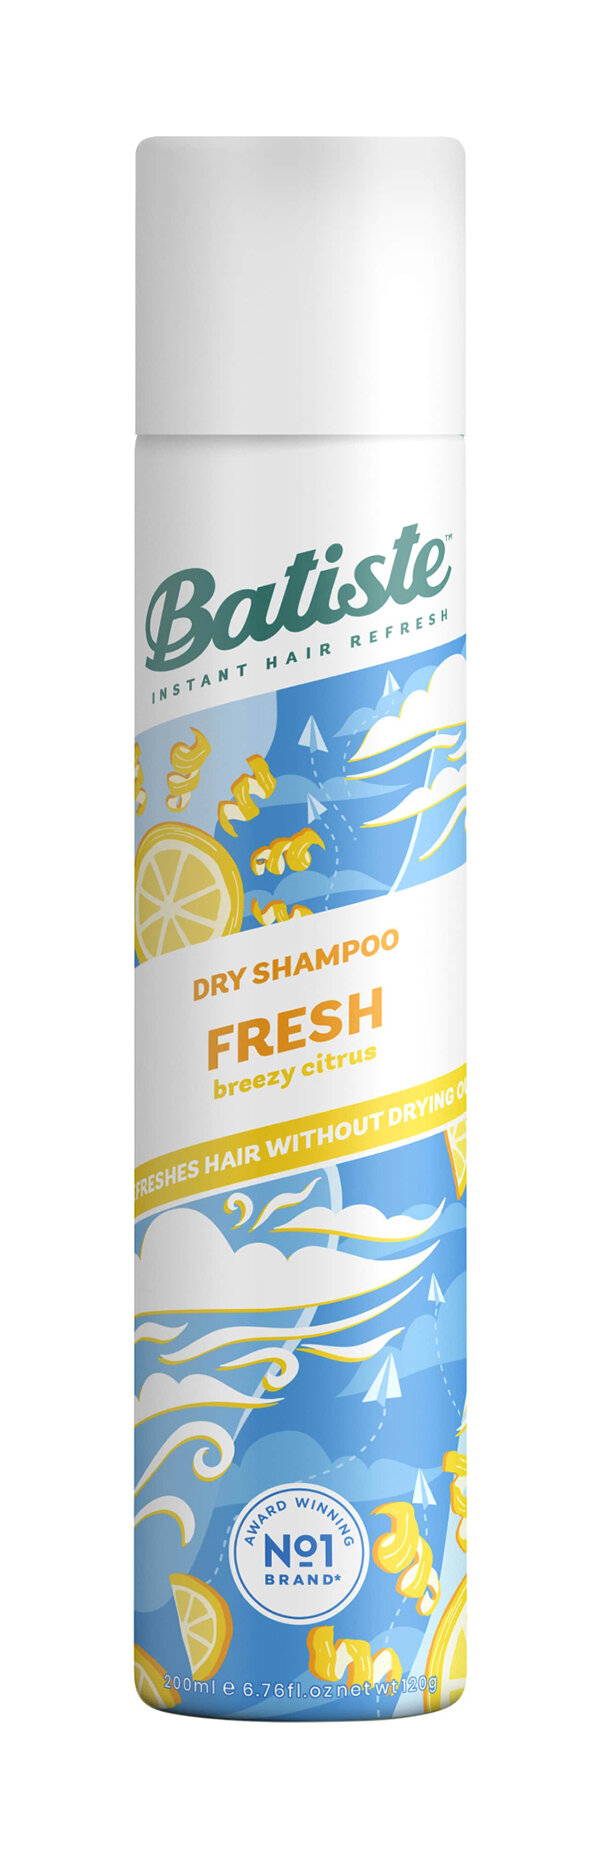 Сухой шампунь со свежим ароматом Batiste Dry Shampoo Fresh /200 мл/гр.